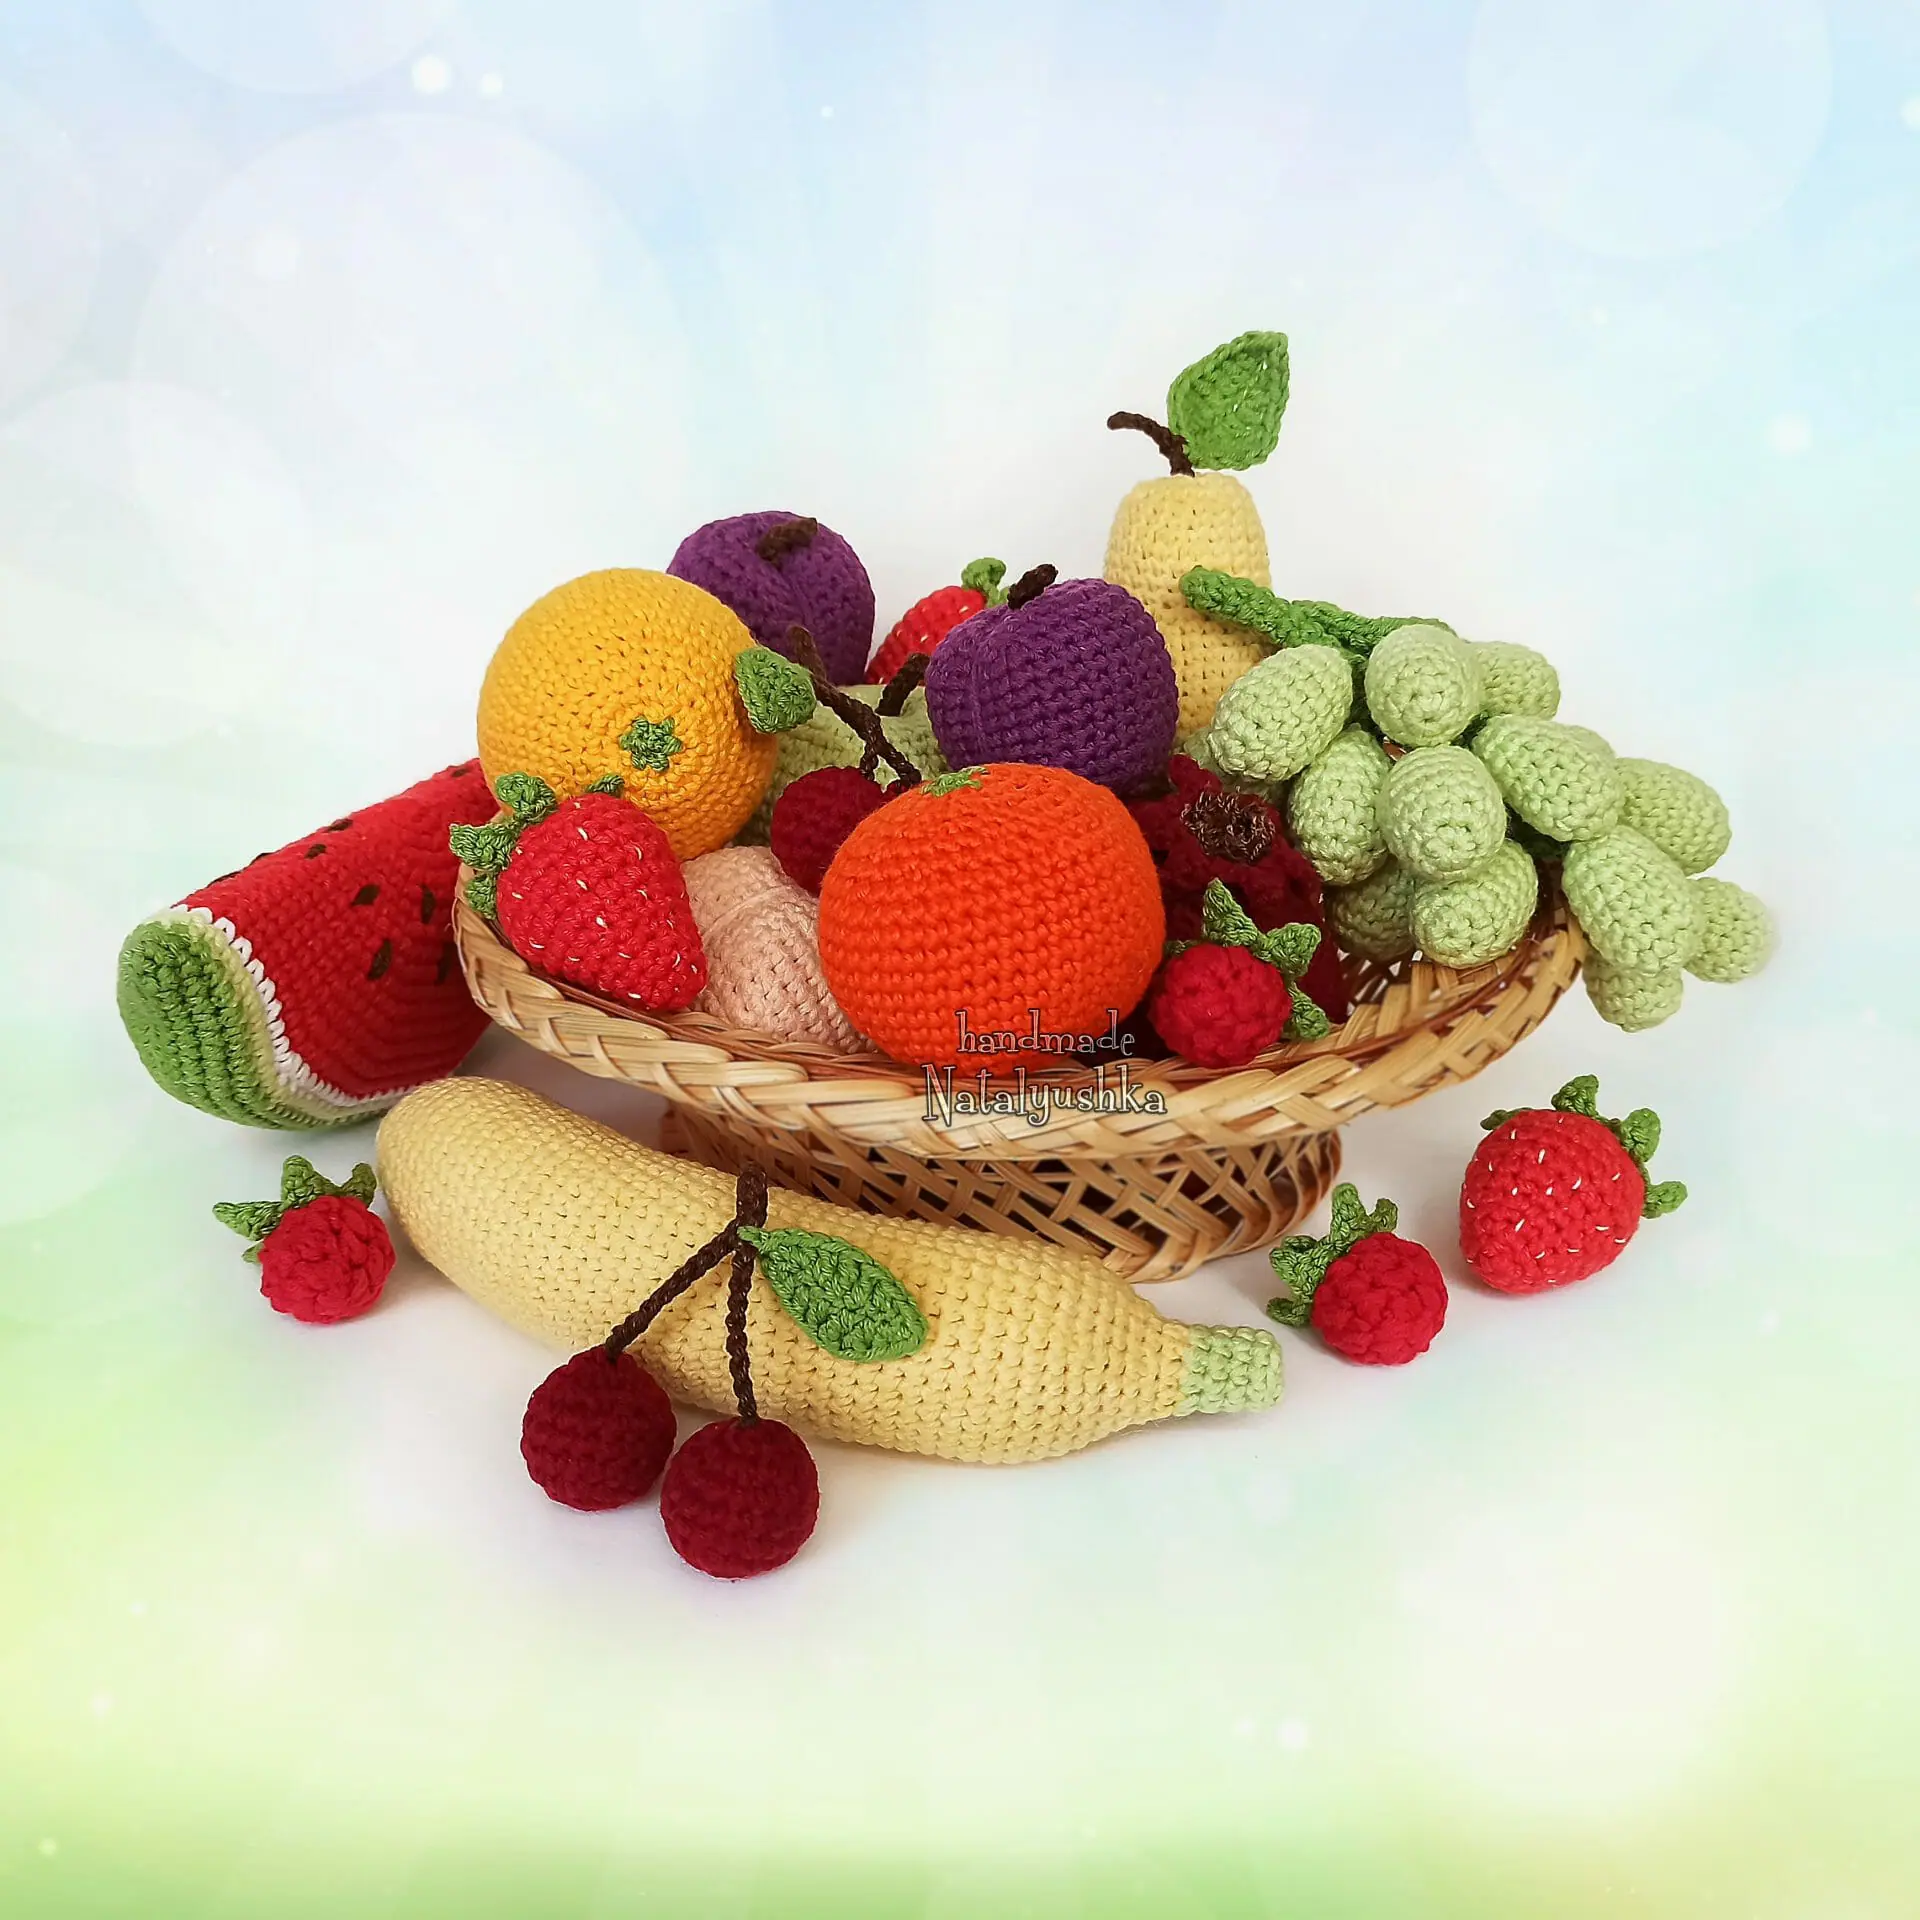 Soft crochet Fruits & Berries, Learning sensory toy, Play food set.